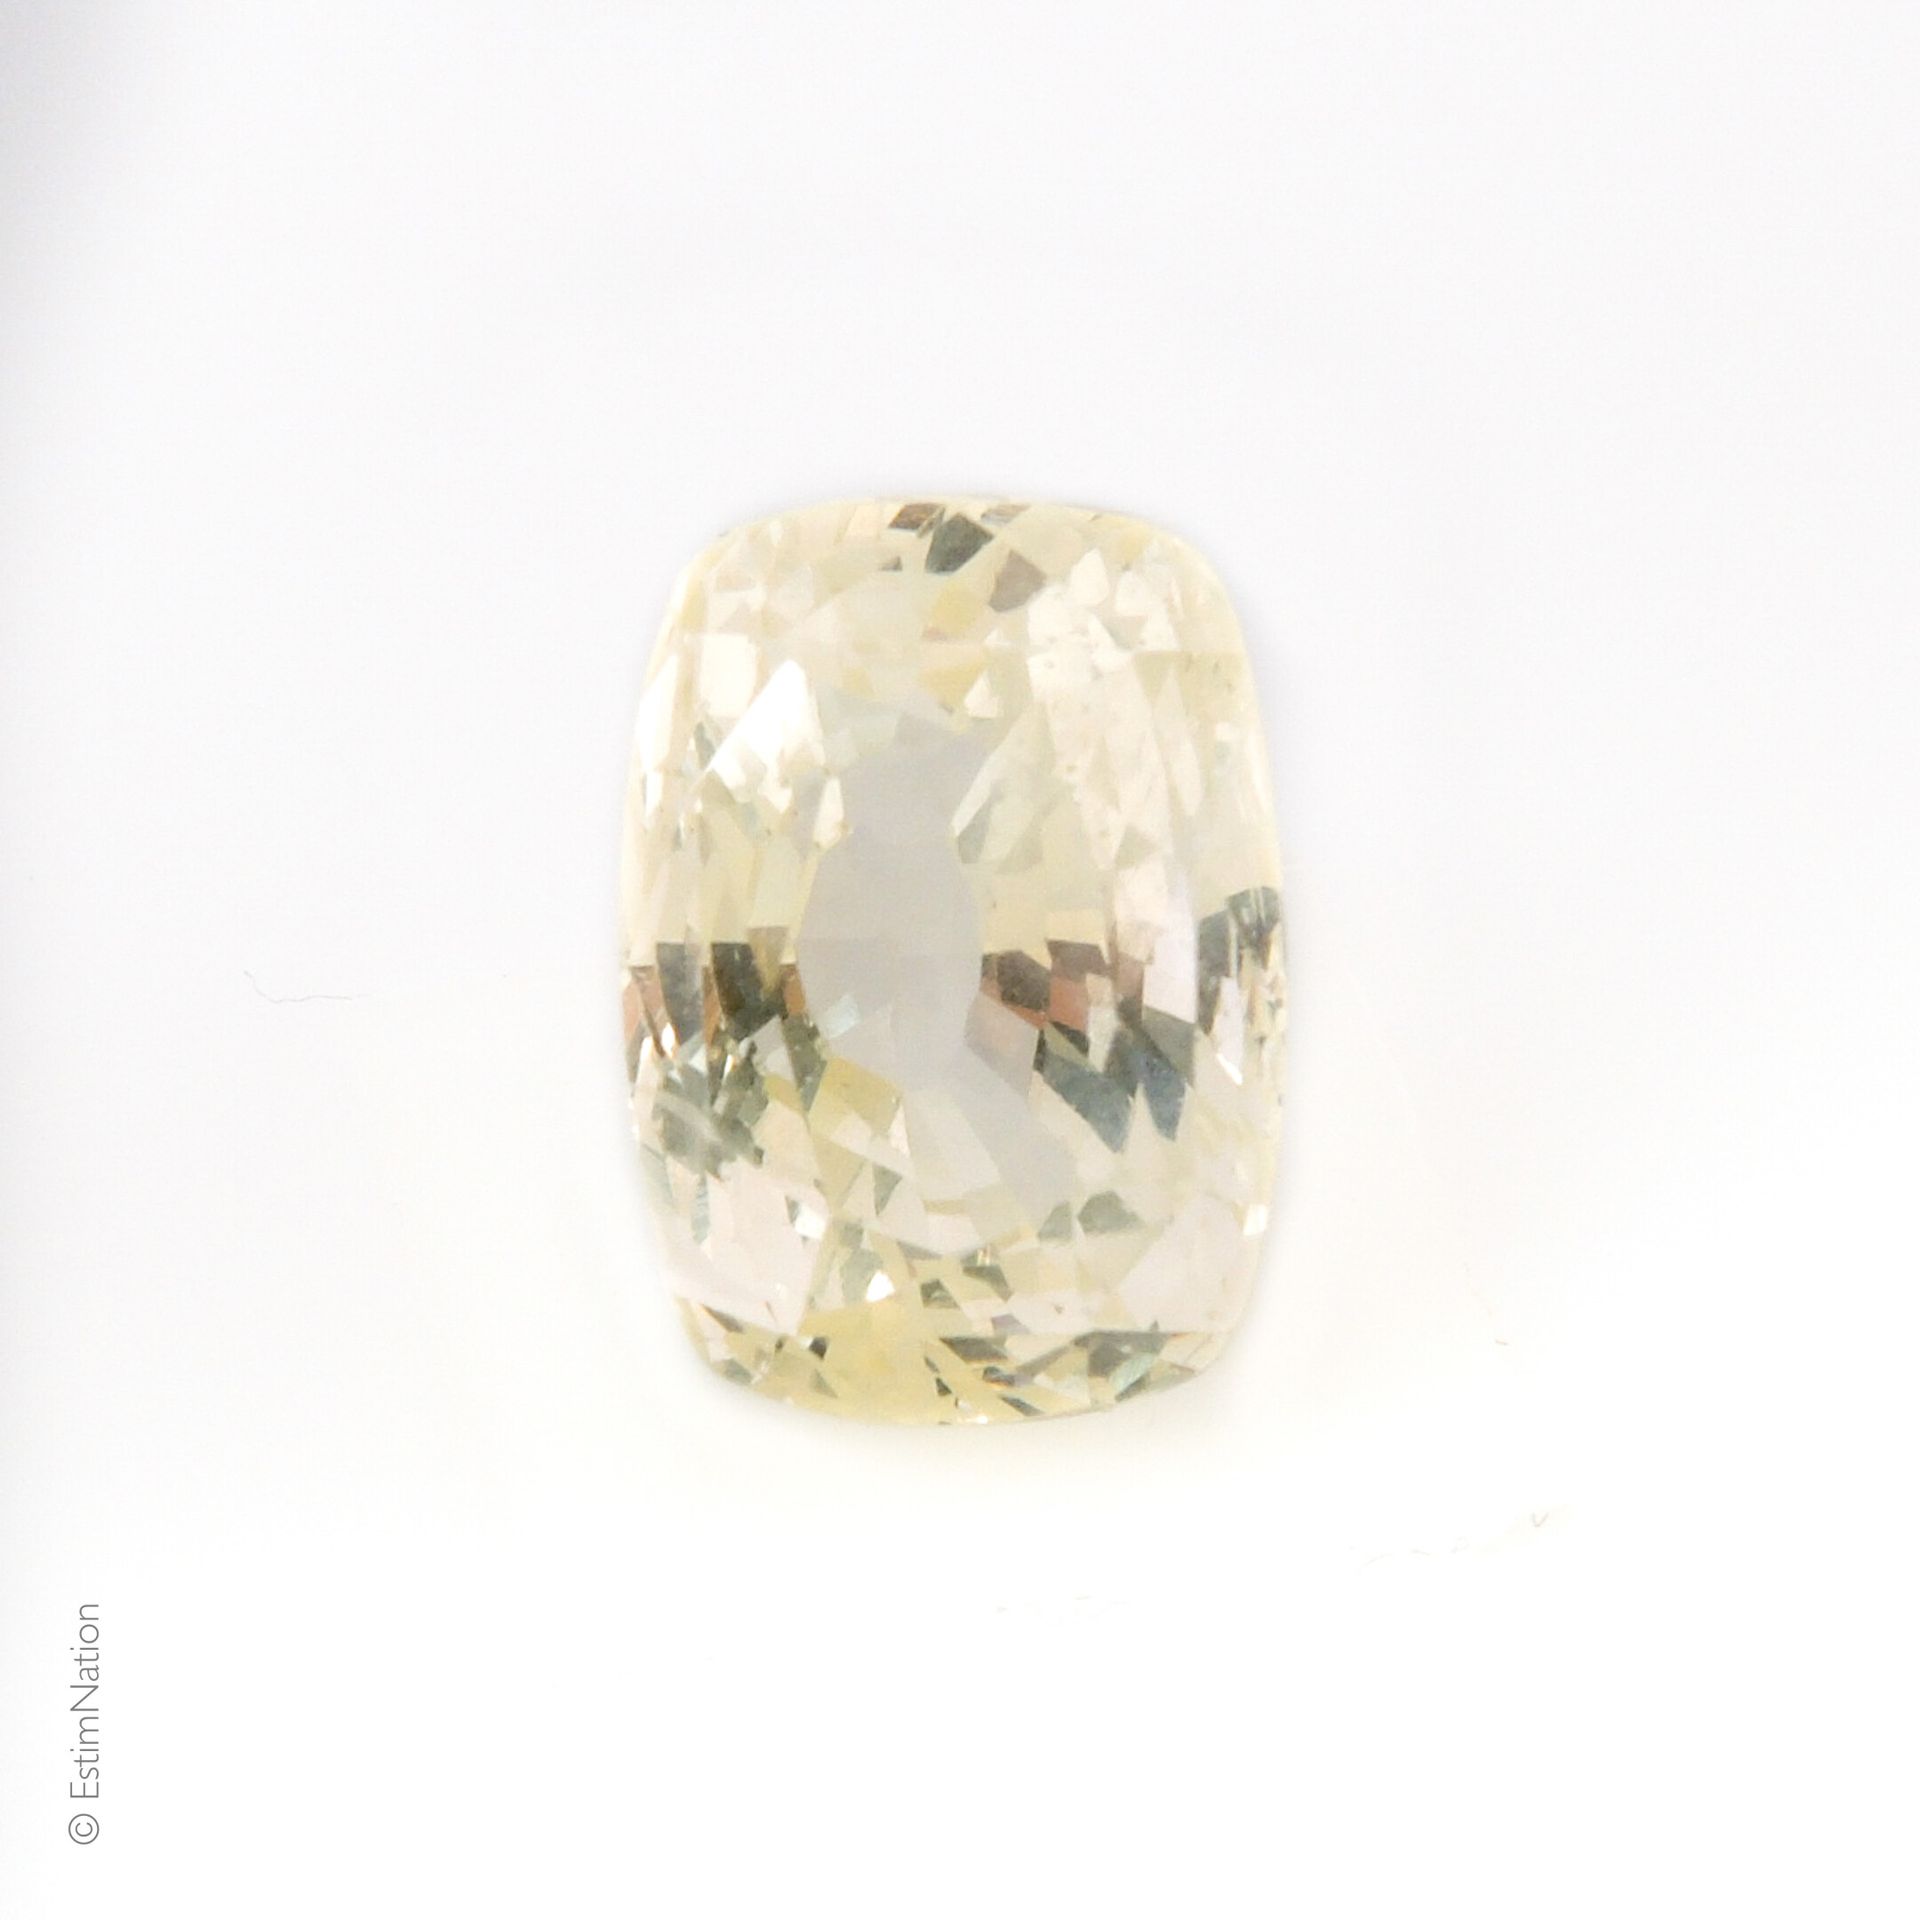 SAPHIR 5.68 CARAT 黄色刻面枕形切割蓝宝石，重约5.68克拉。

尺寸：10.61 x 7.56 x 6.82毫米。



附有美国国际宝石实验&hellip;